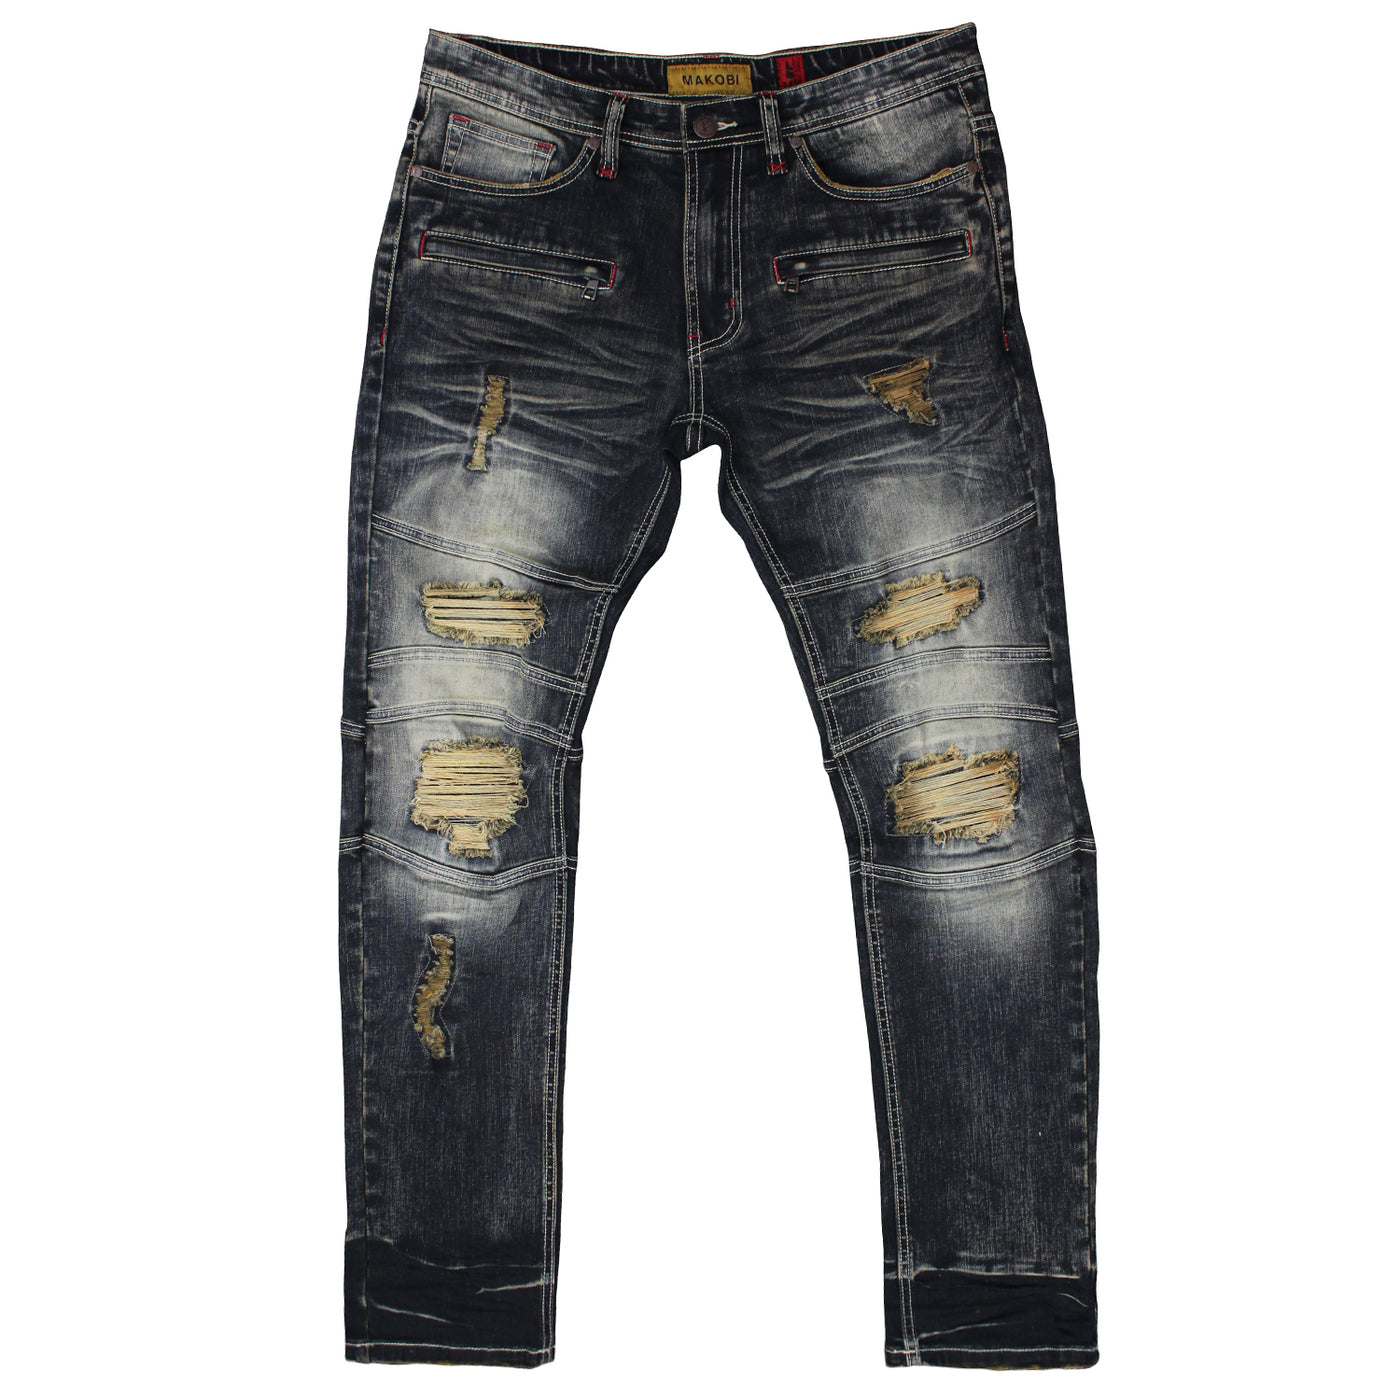 M1785 Makobi Atrani Denim Jeans - Dirt Wash